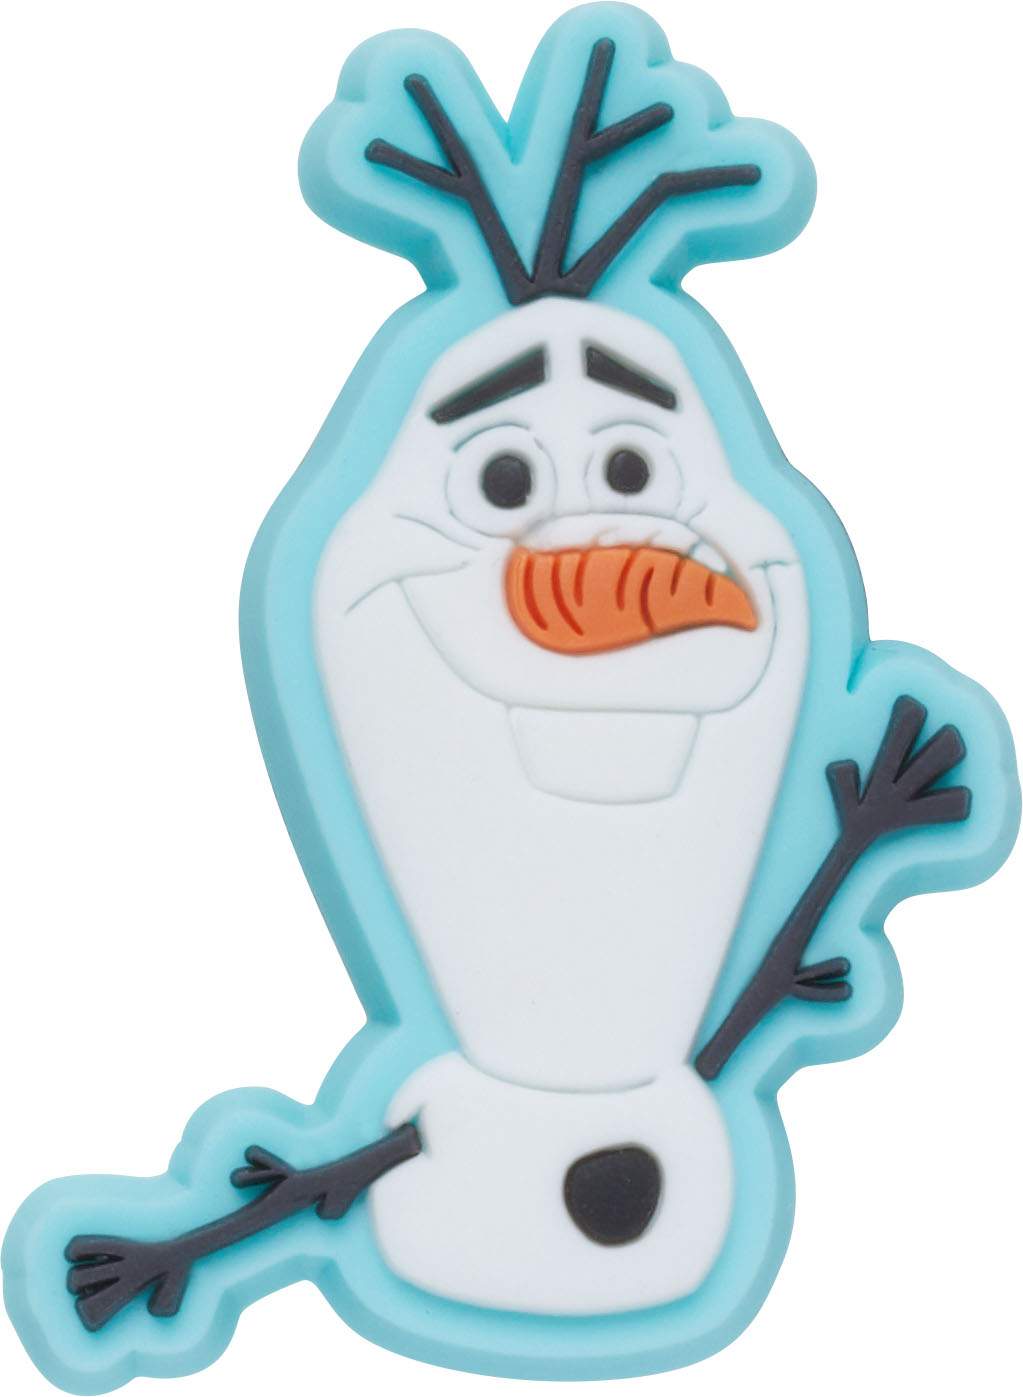 Disney Frozen 2 Olaf Jibbitz Shoe Charm 